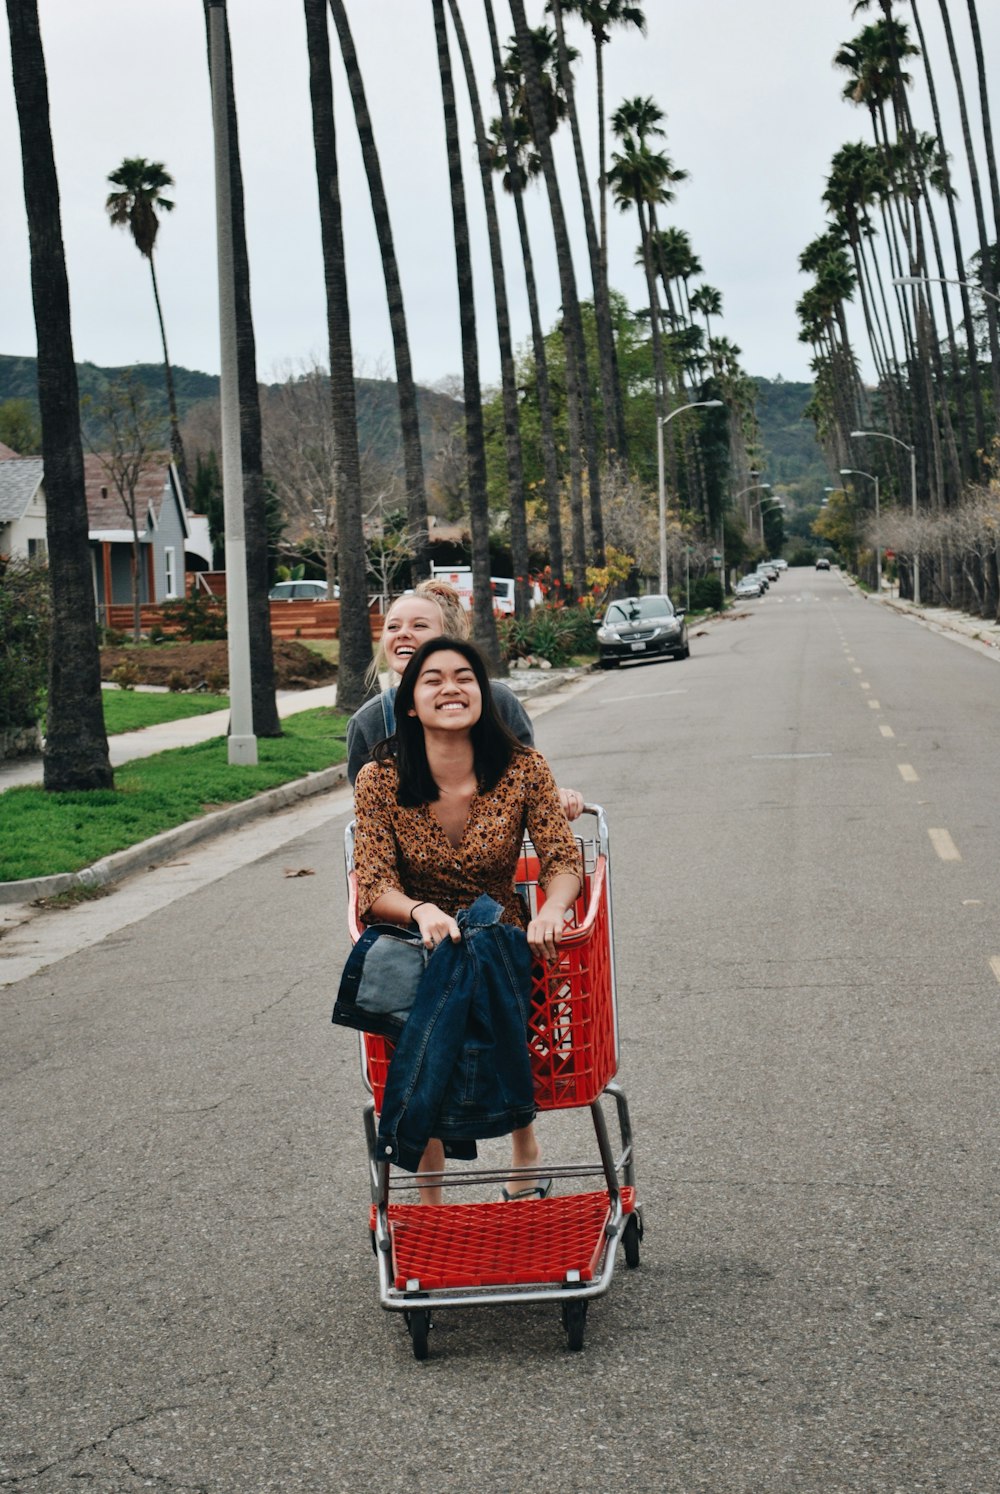 woman riding red shopping cart